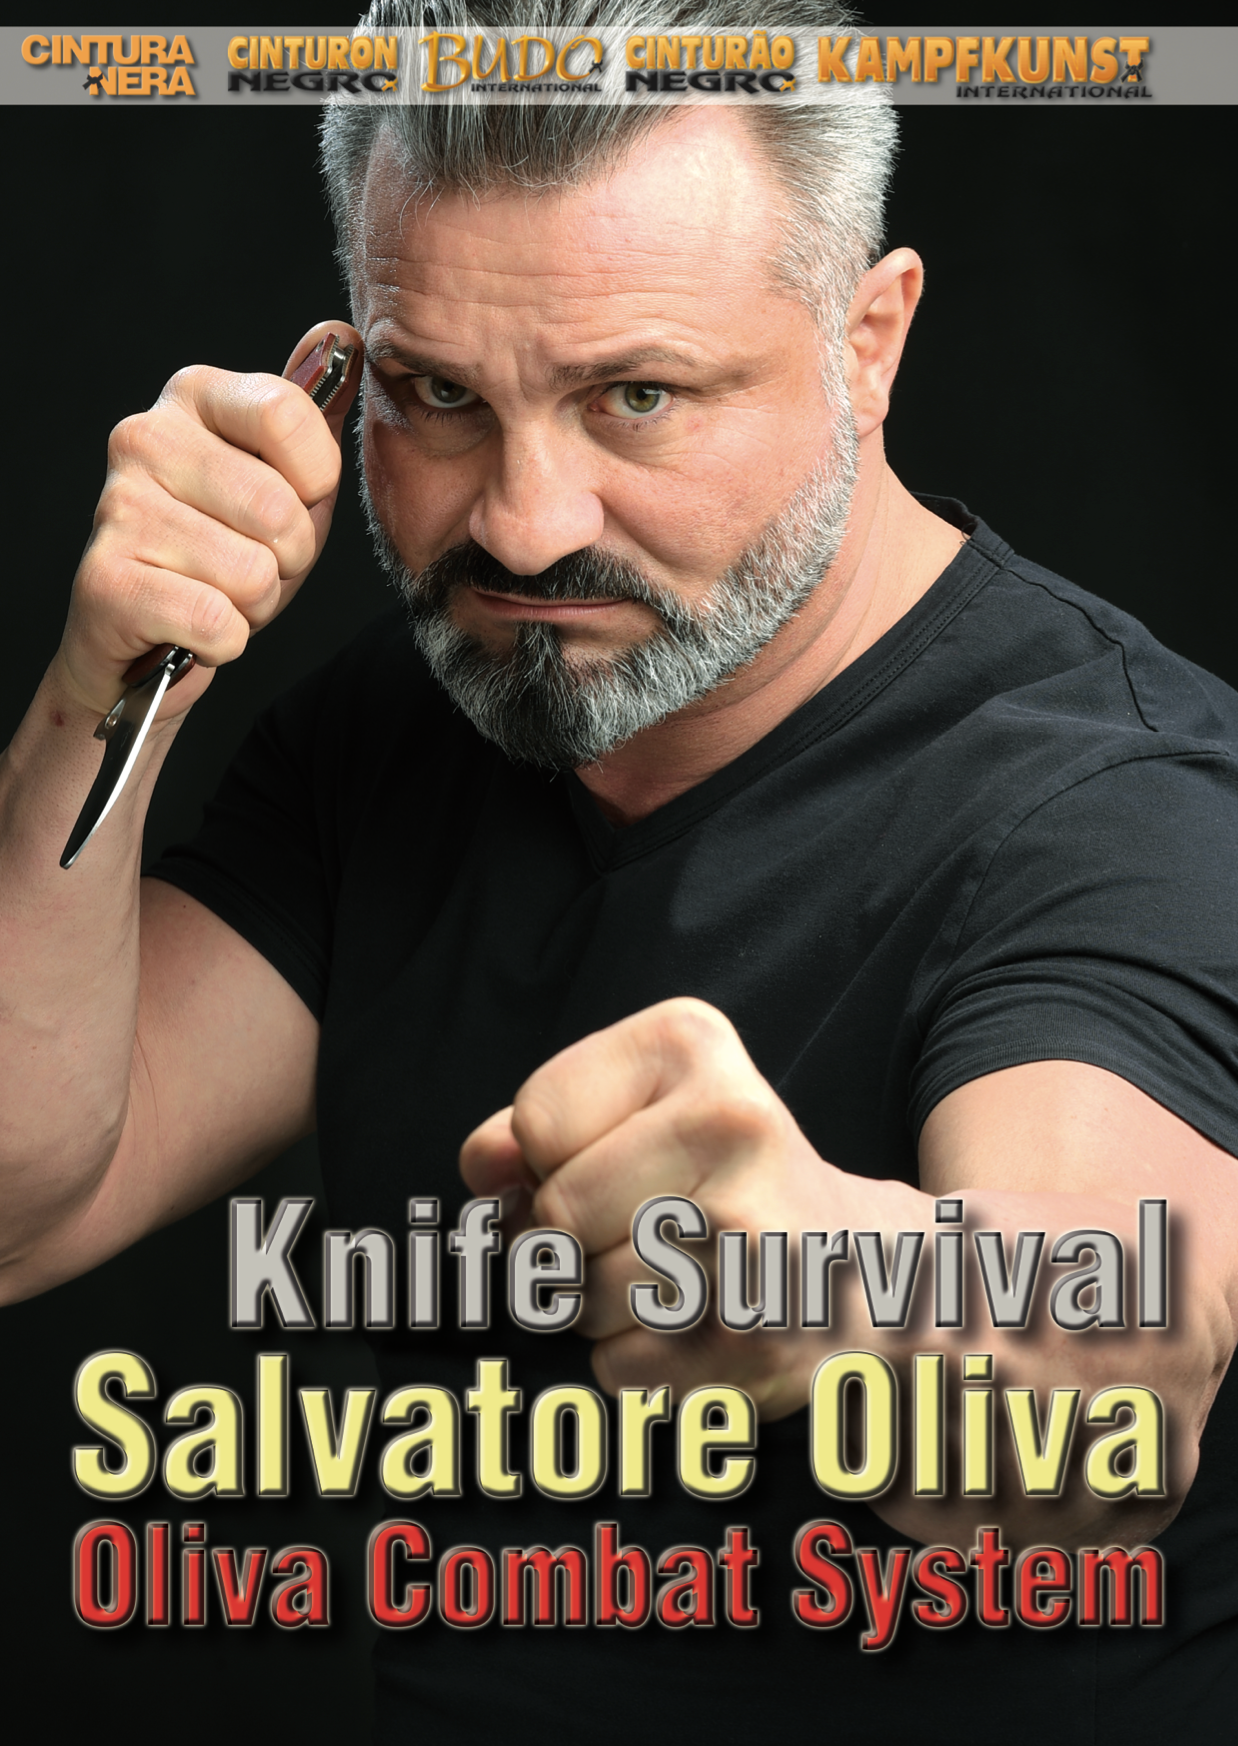 DVD de supervivencia con cuchillos de Salvatore Oliva